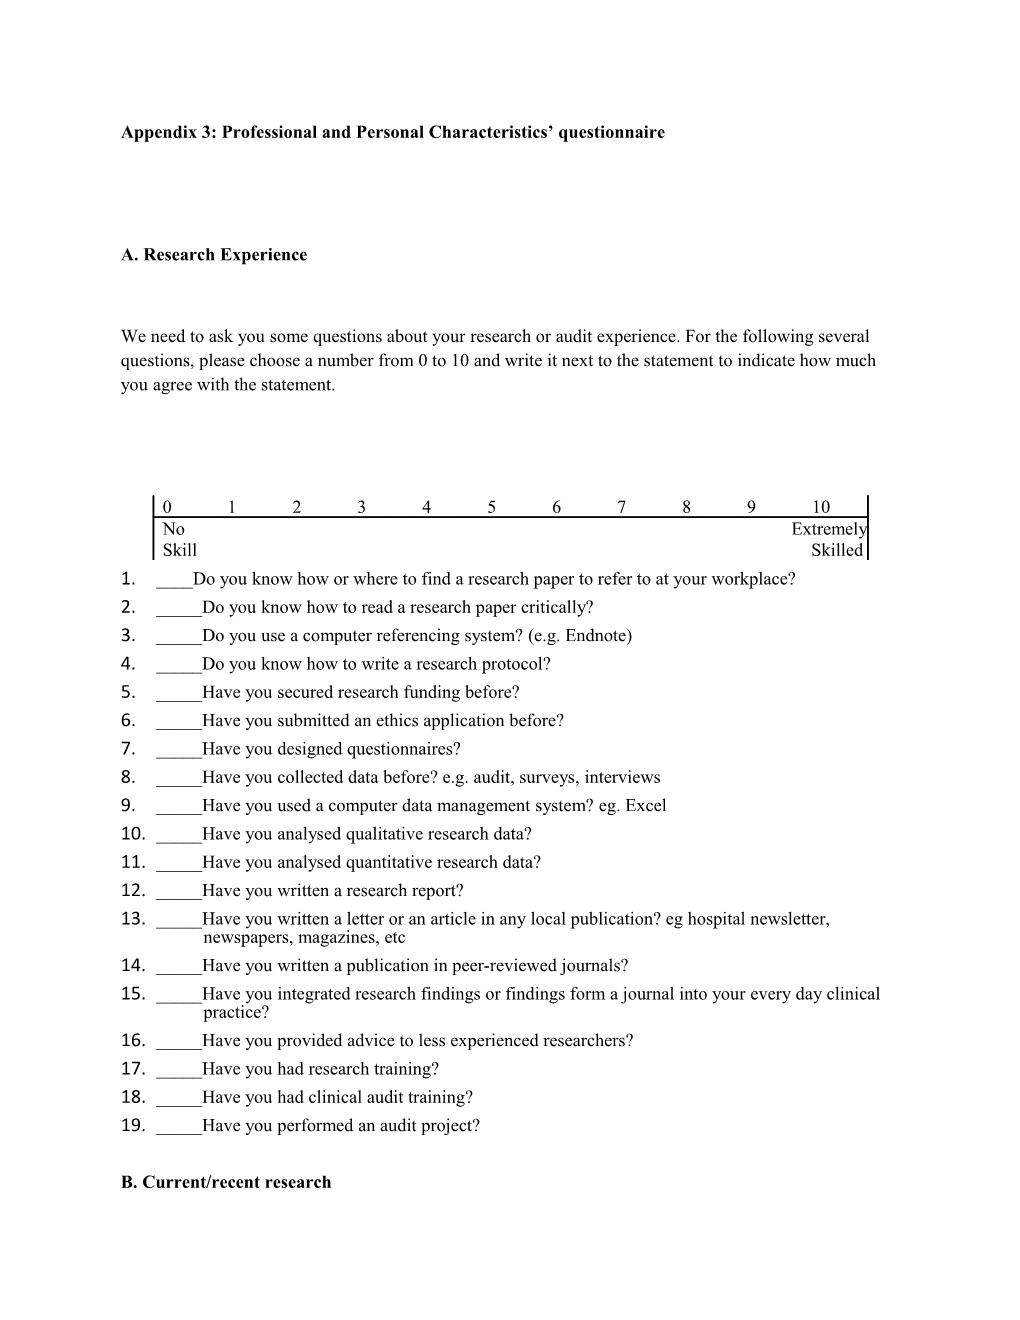 Appendix 3: Professional and Personal Characteristics Questionnaire